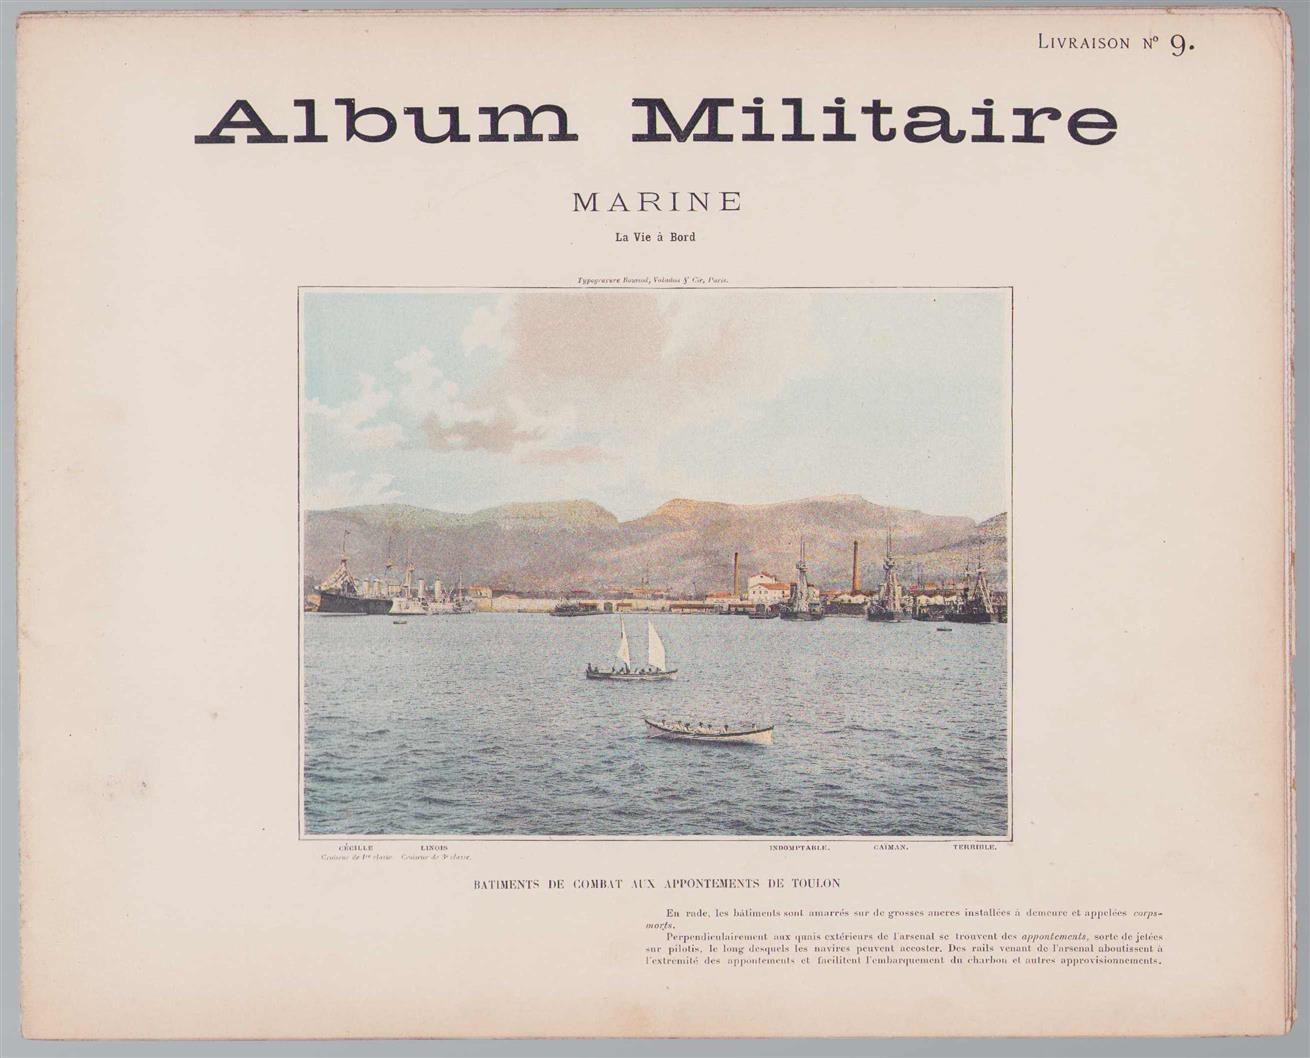 n.n - Album militaire de l'Armee francaise. Marine  La vie a Bord (2)